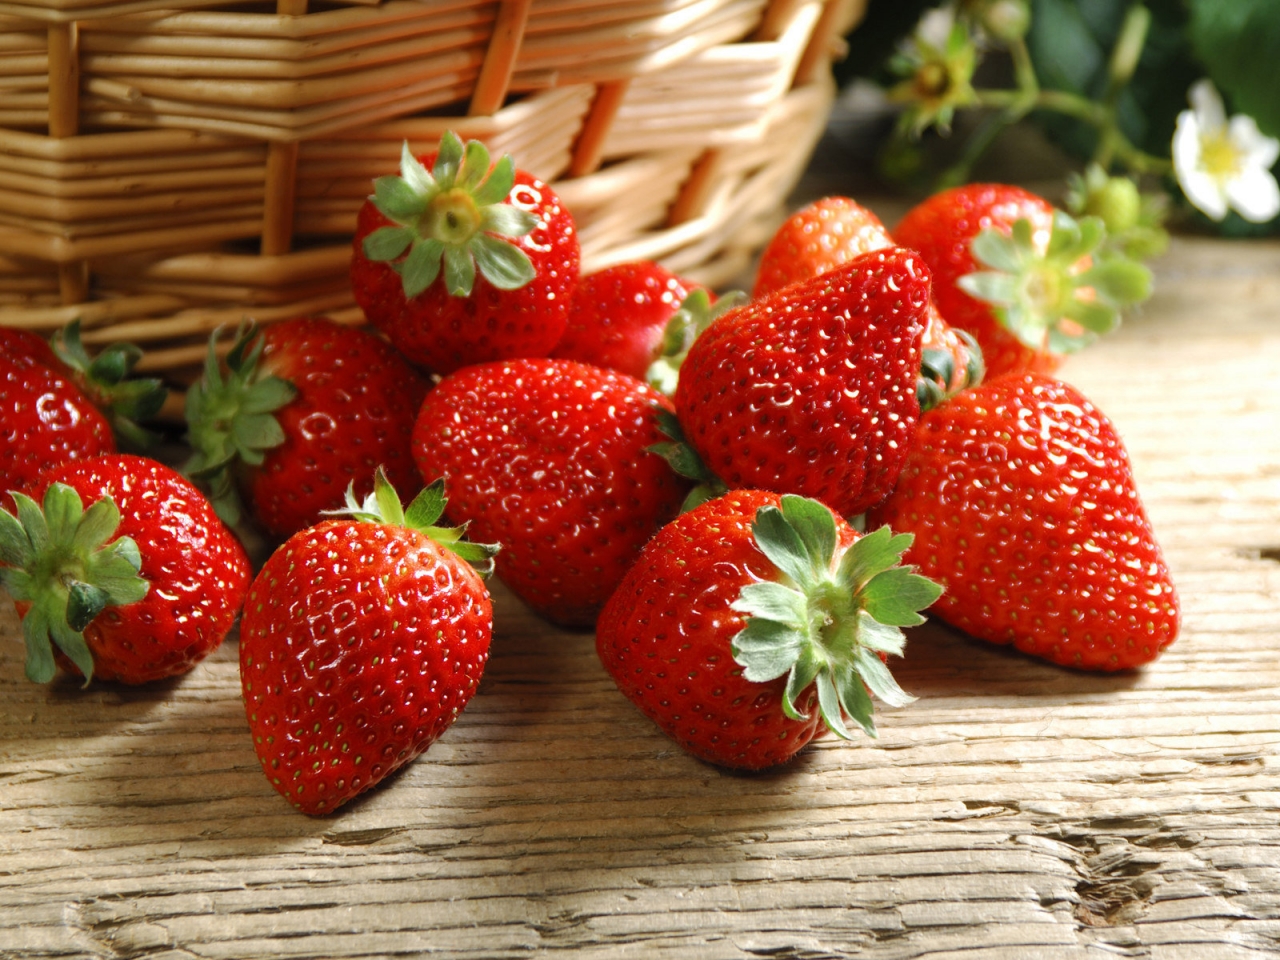 Ripe strawberries for 1280 x 960 resolution